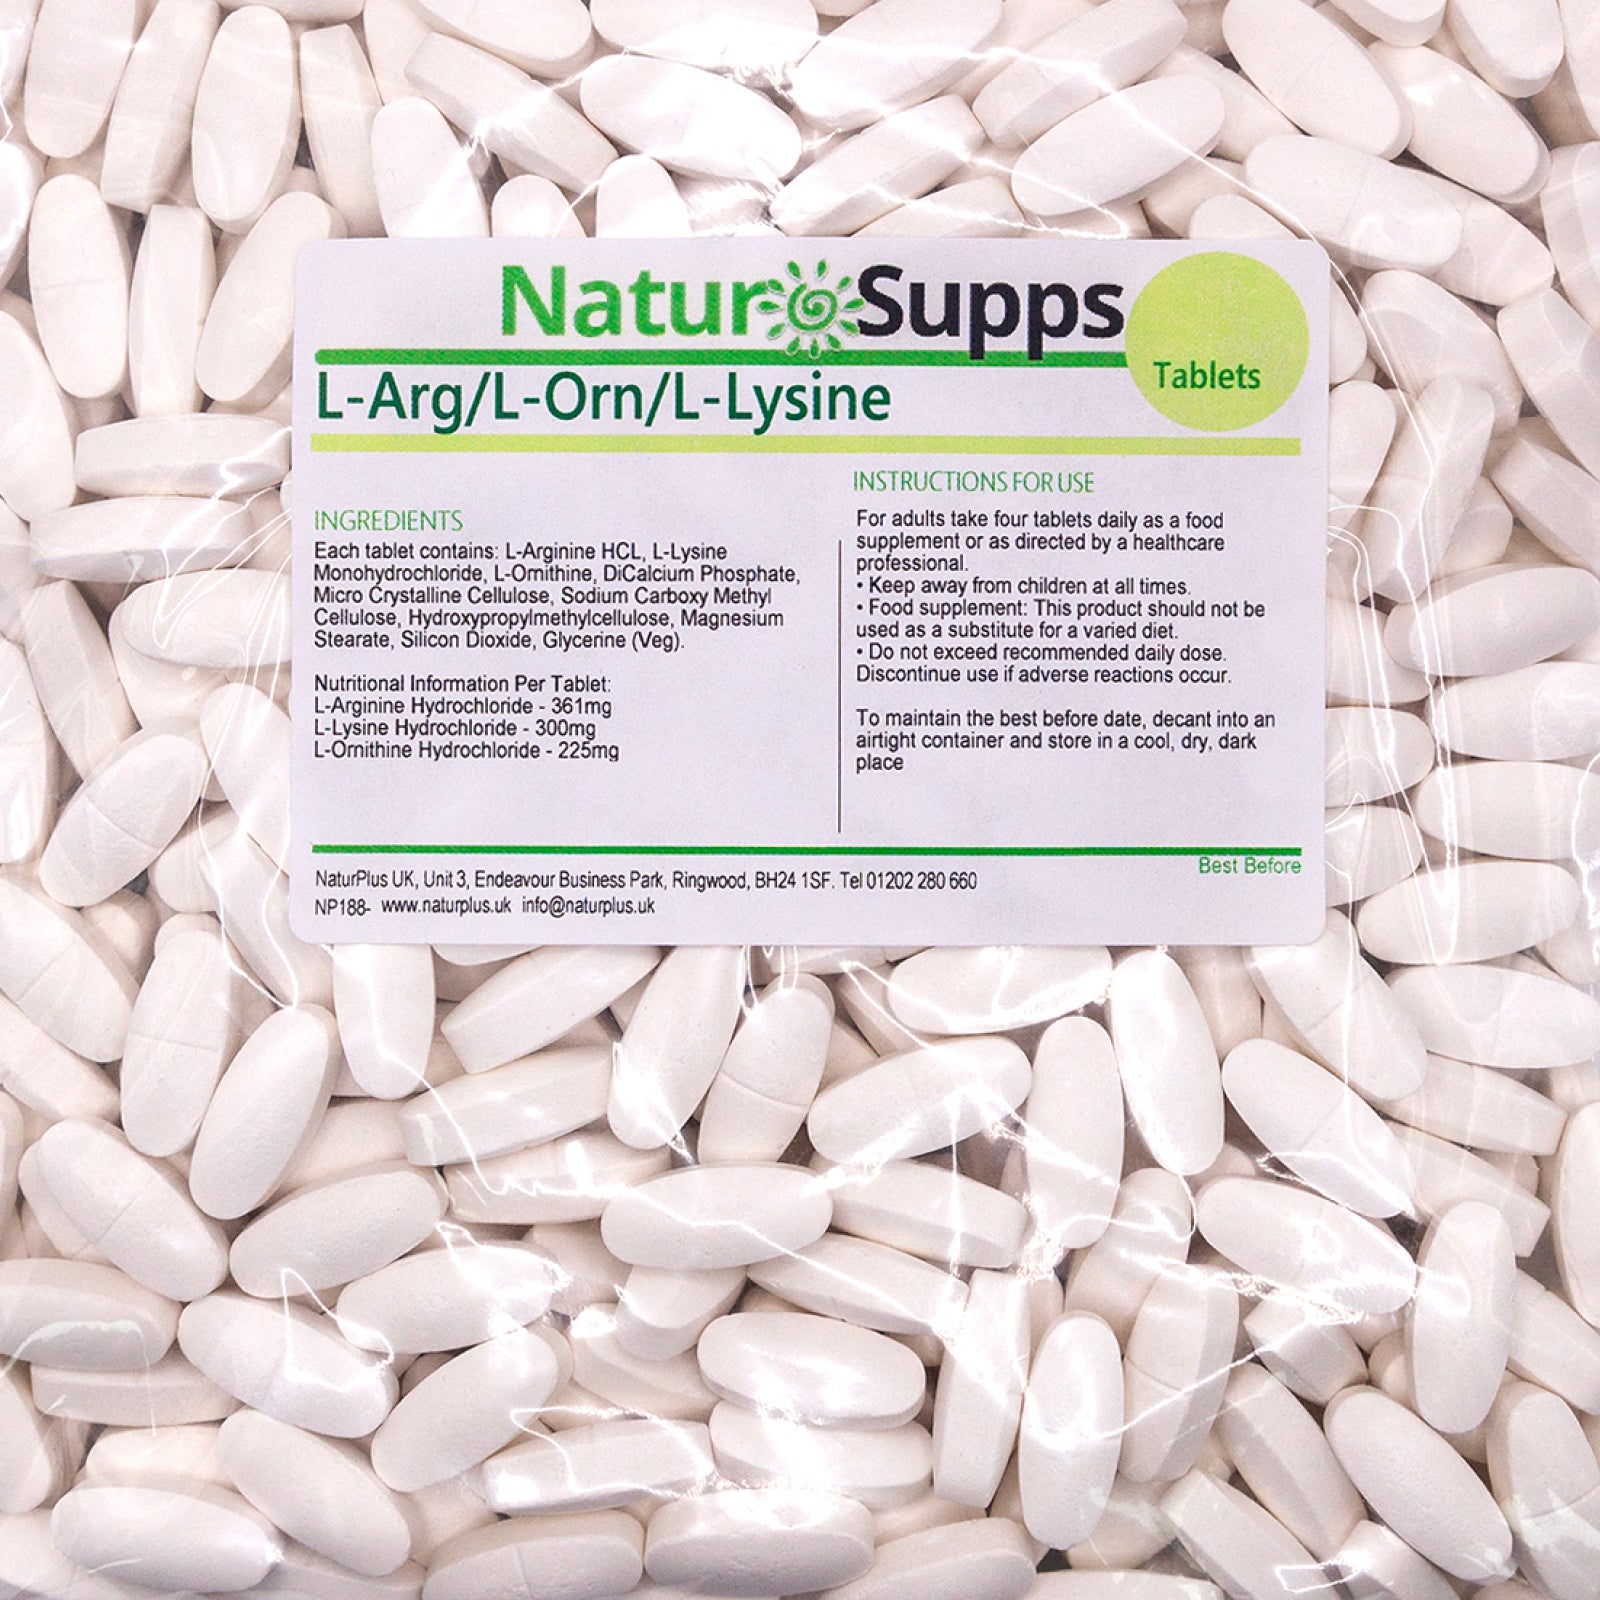 L-Arginine, L-Lysine, L-Ornithine 800mg tablets